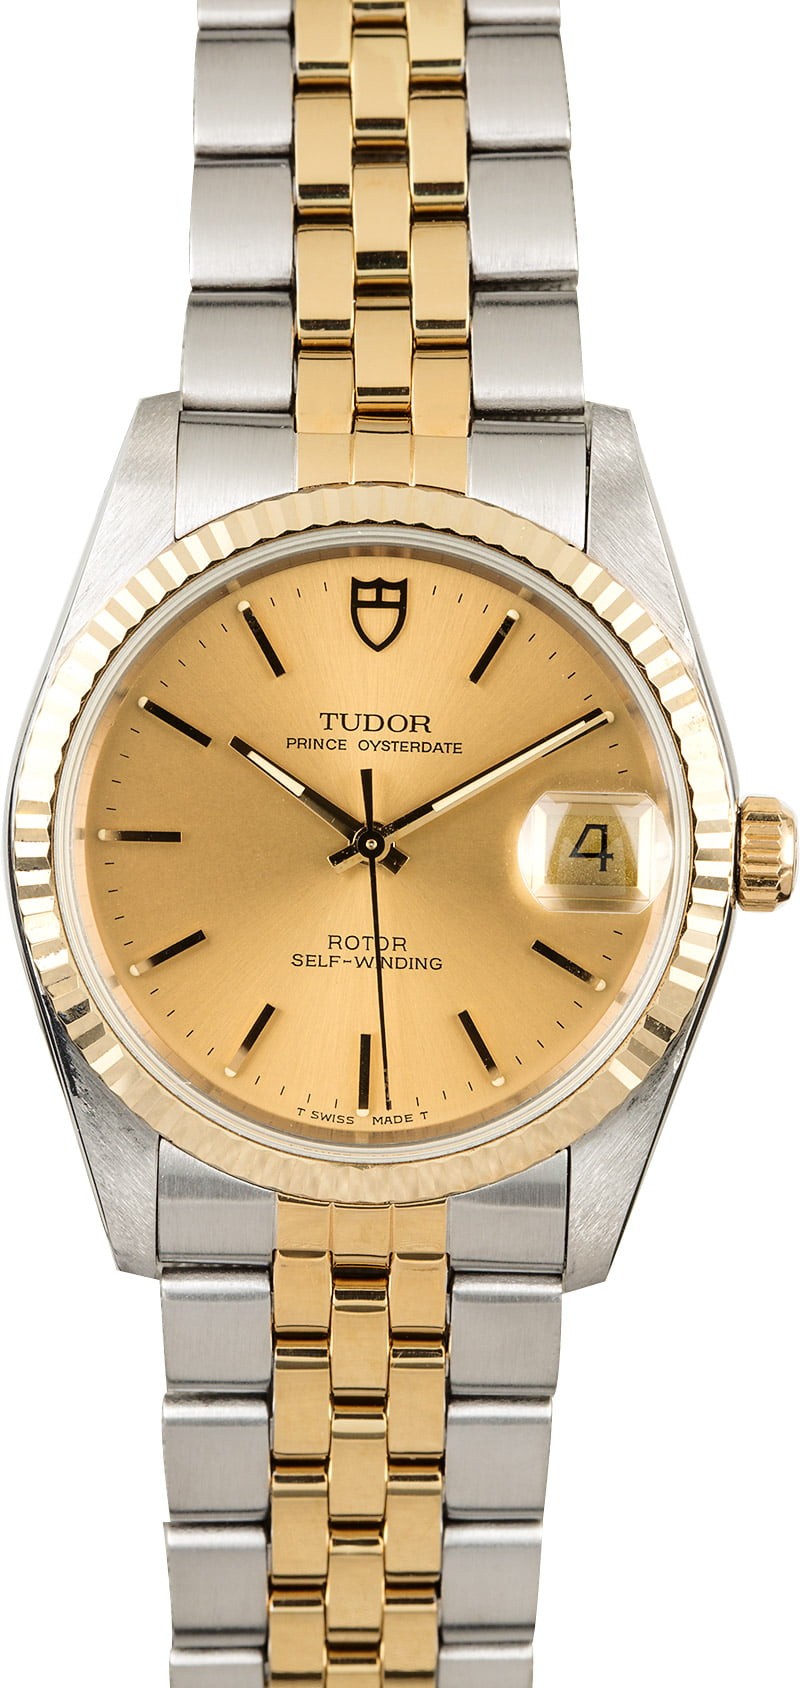 Imitation Tudor Prince Oysterdate 74033 Two Tone Watch WE04122